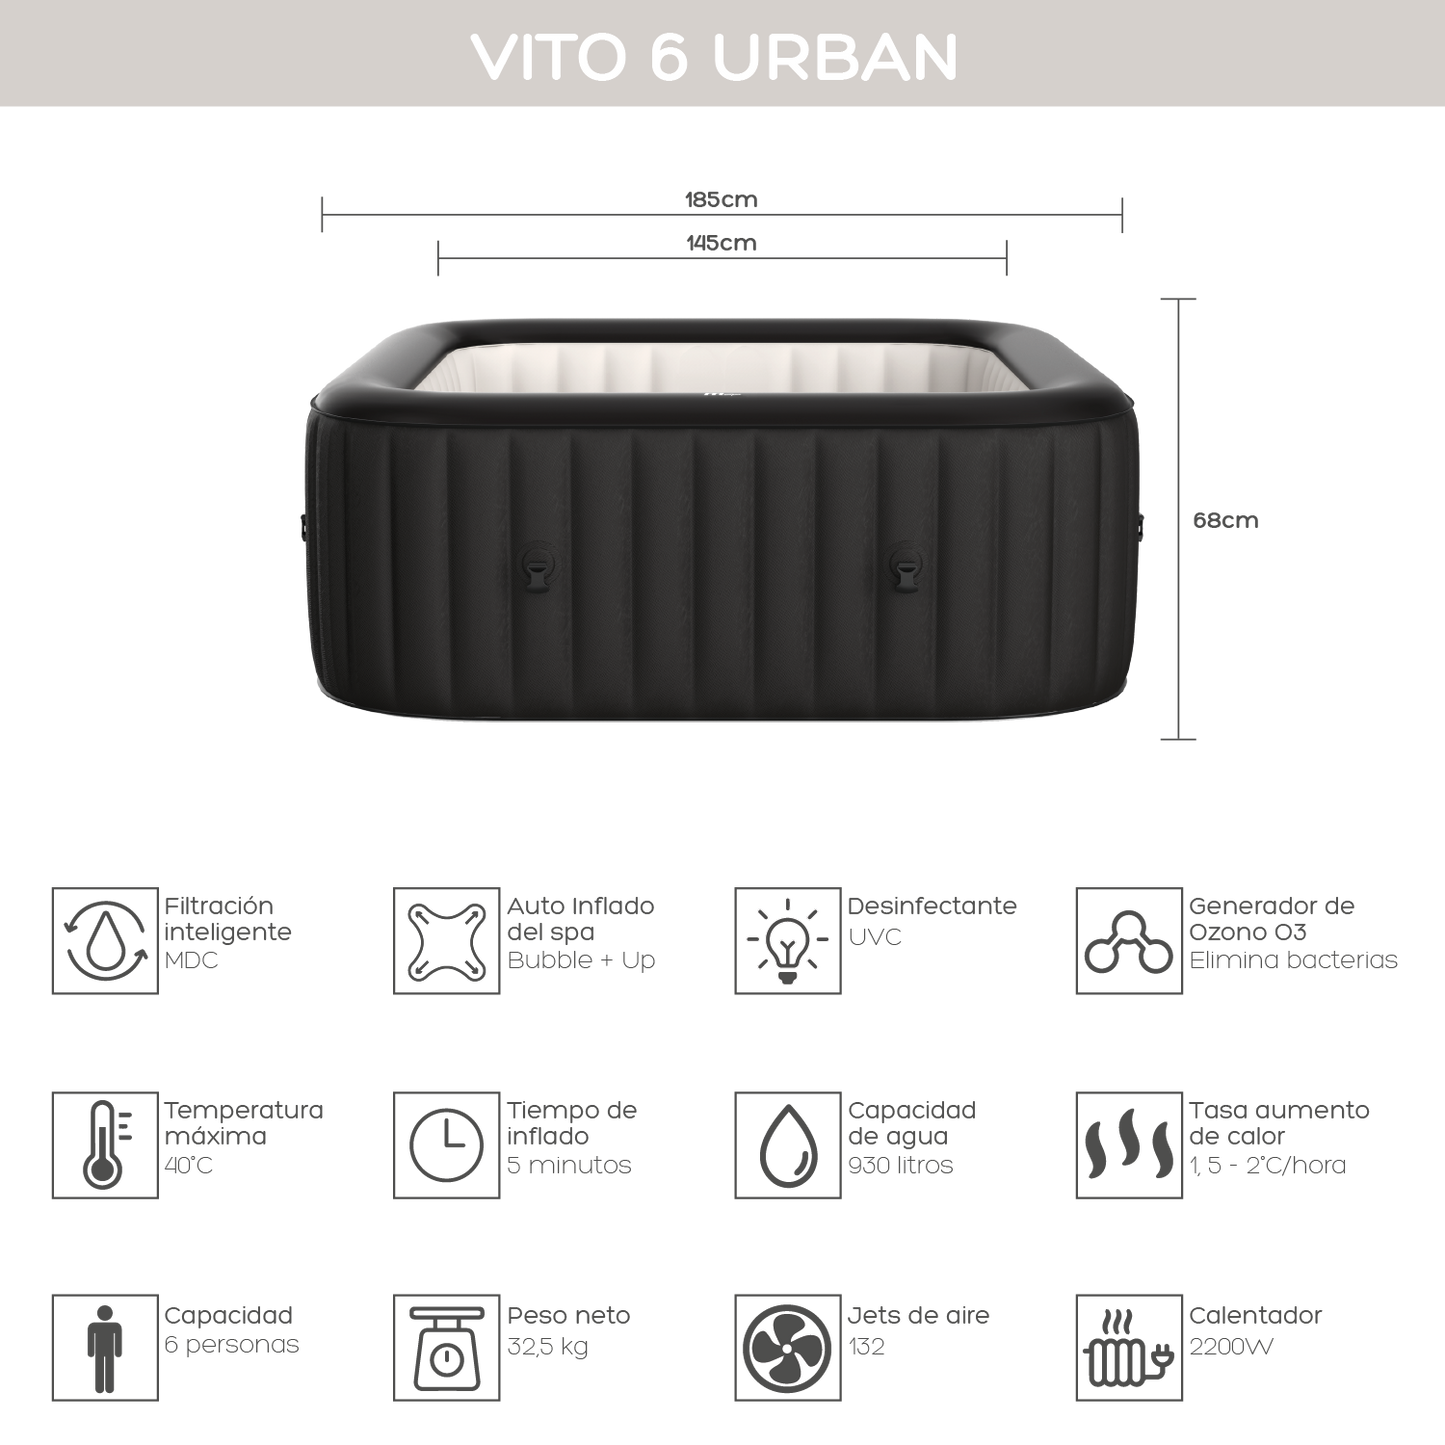 Hot Tub Vito 6 Urban